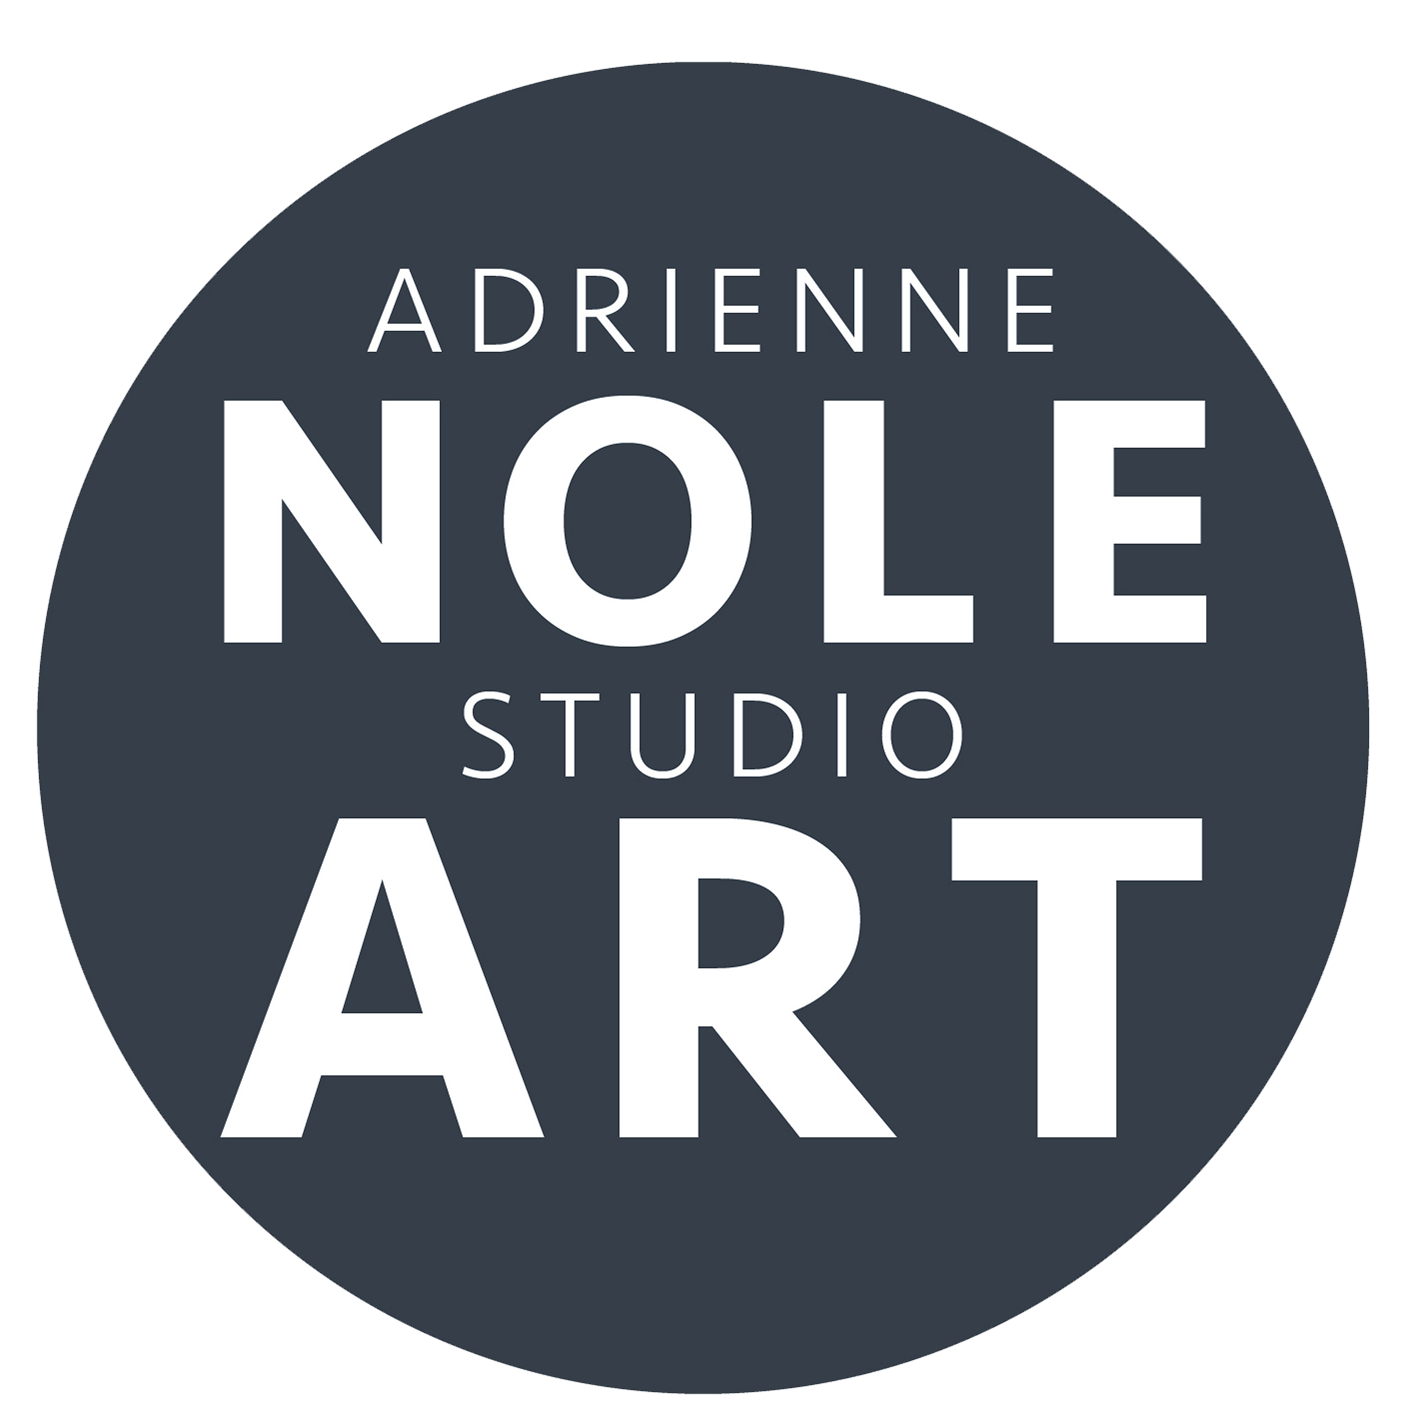 Adrienne Nole